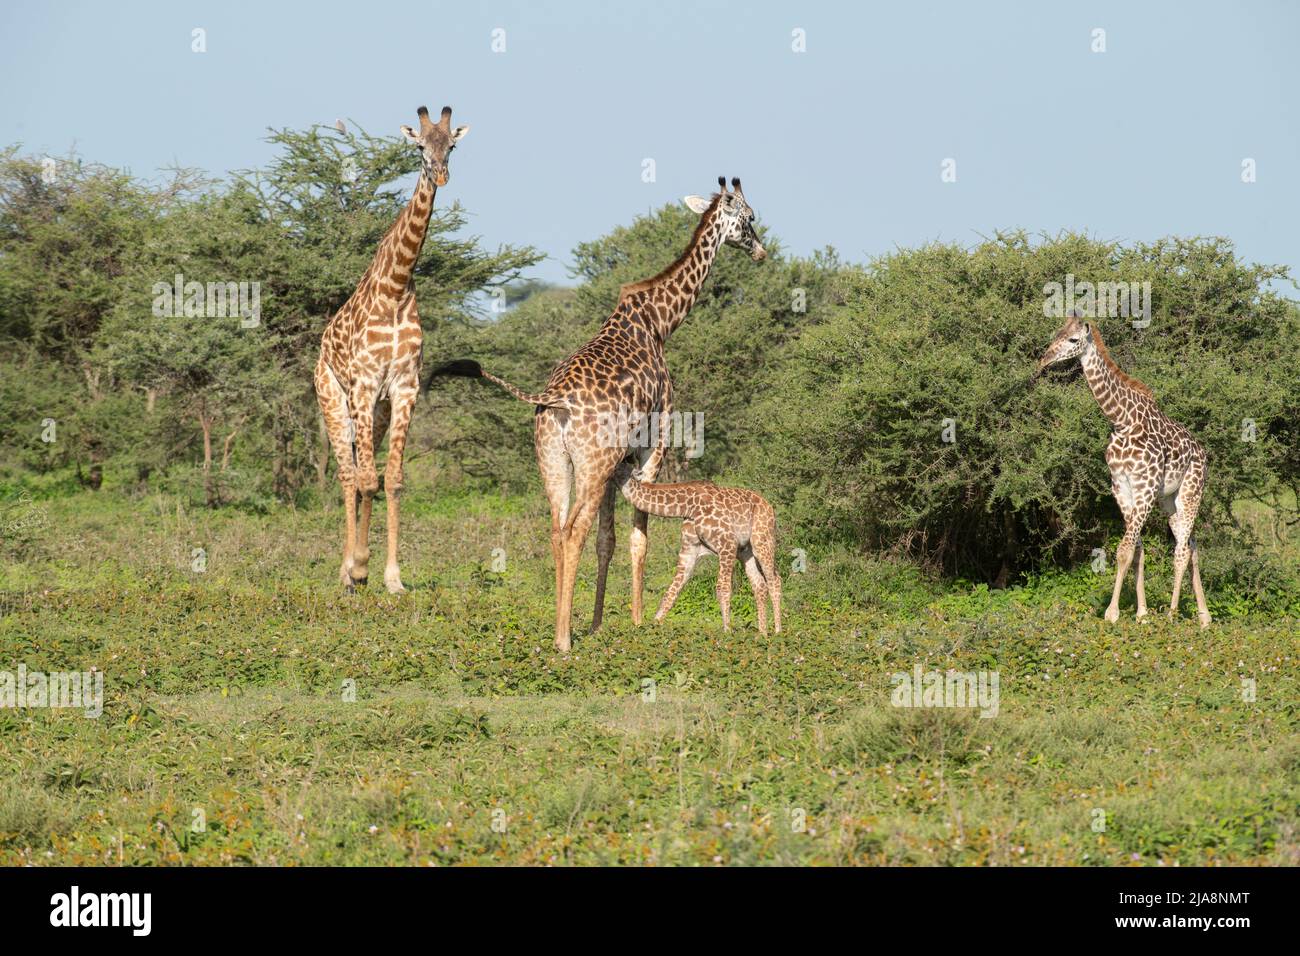 Giraffe nursing, Tanzania Stock Photo